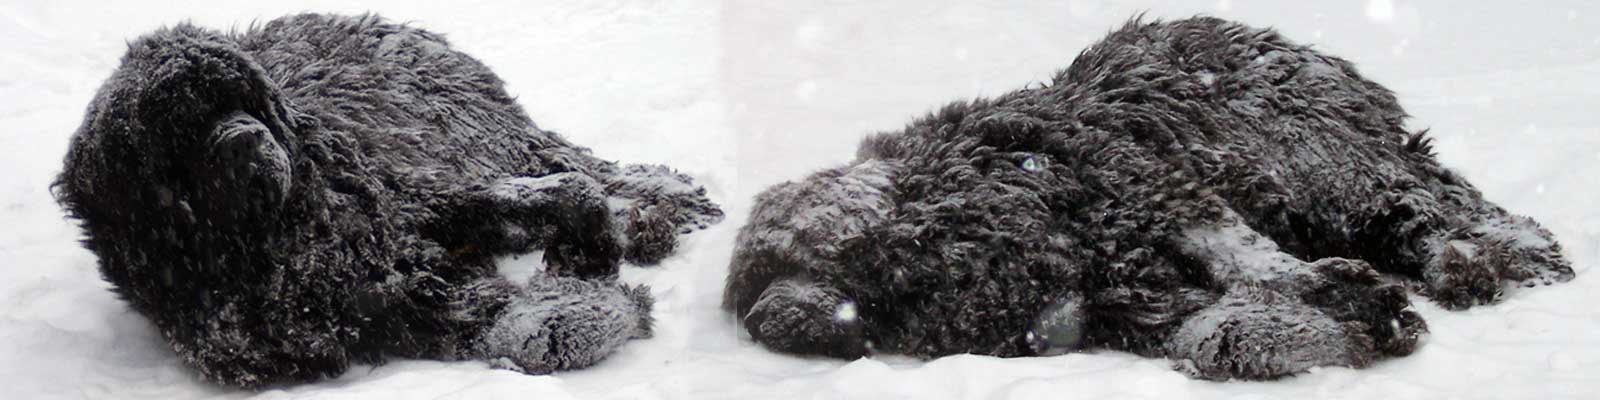 Newfoundland dog in snow